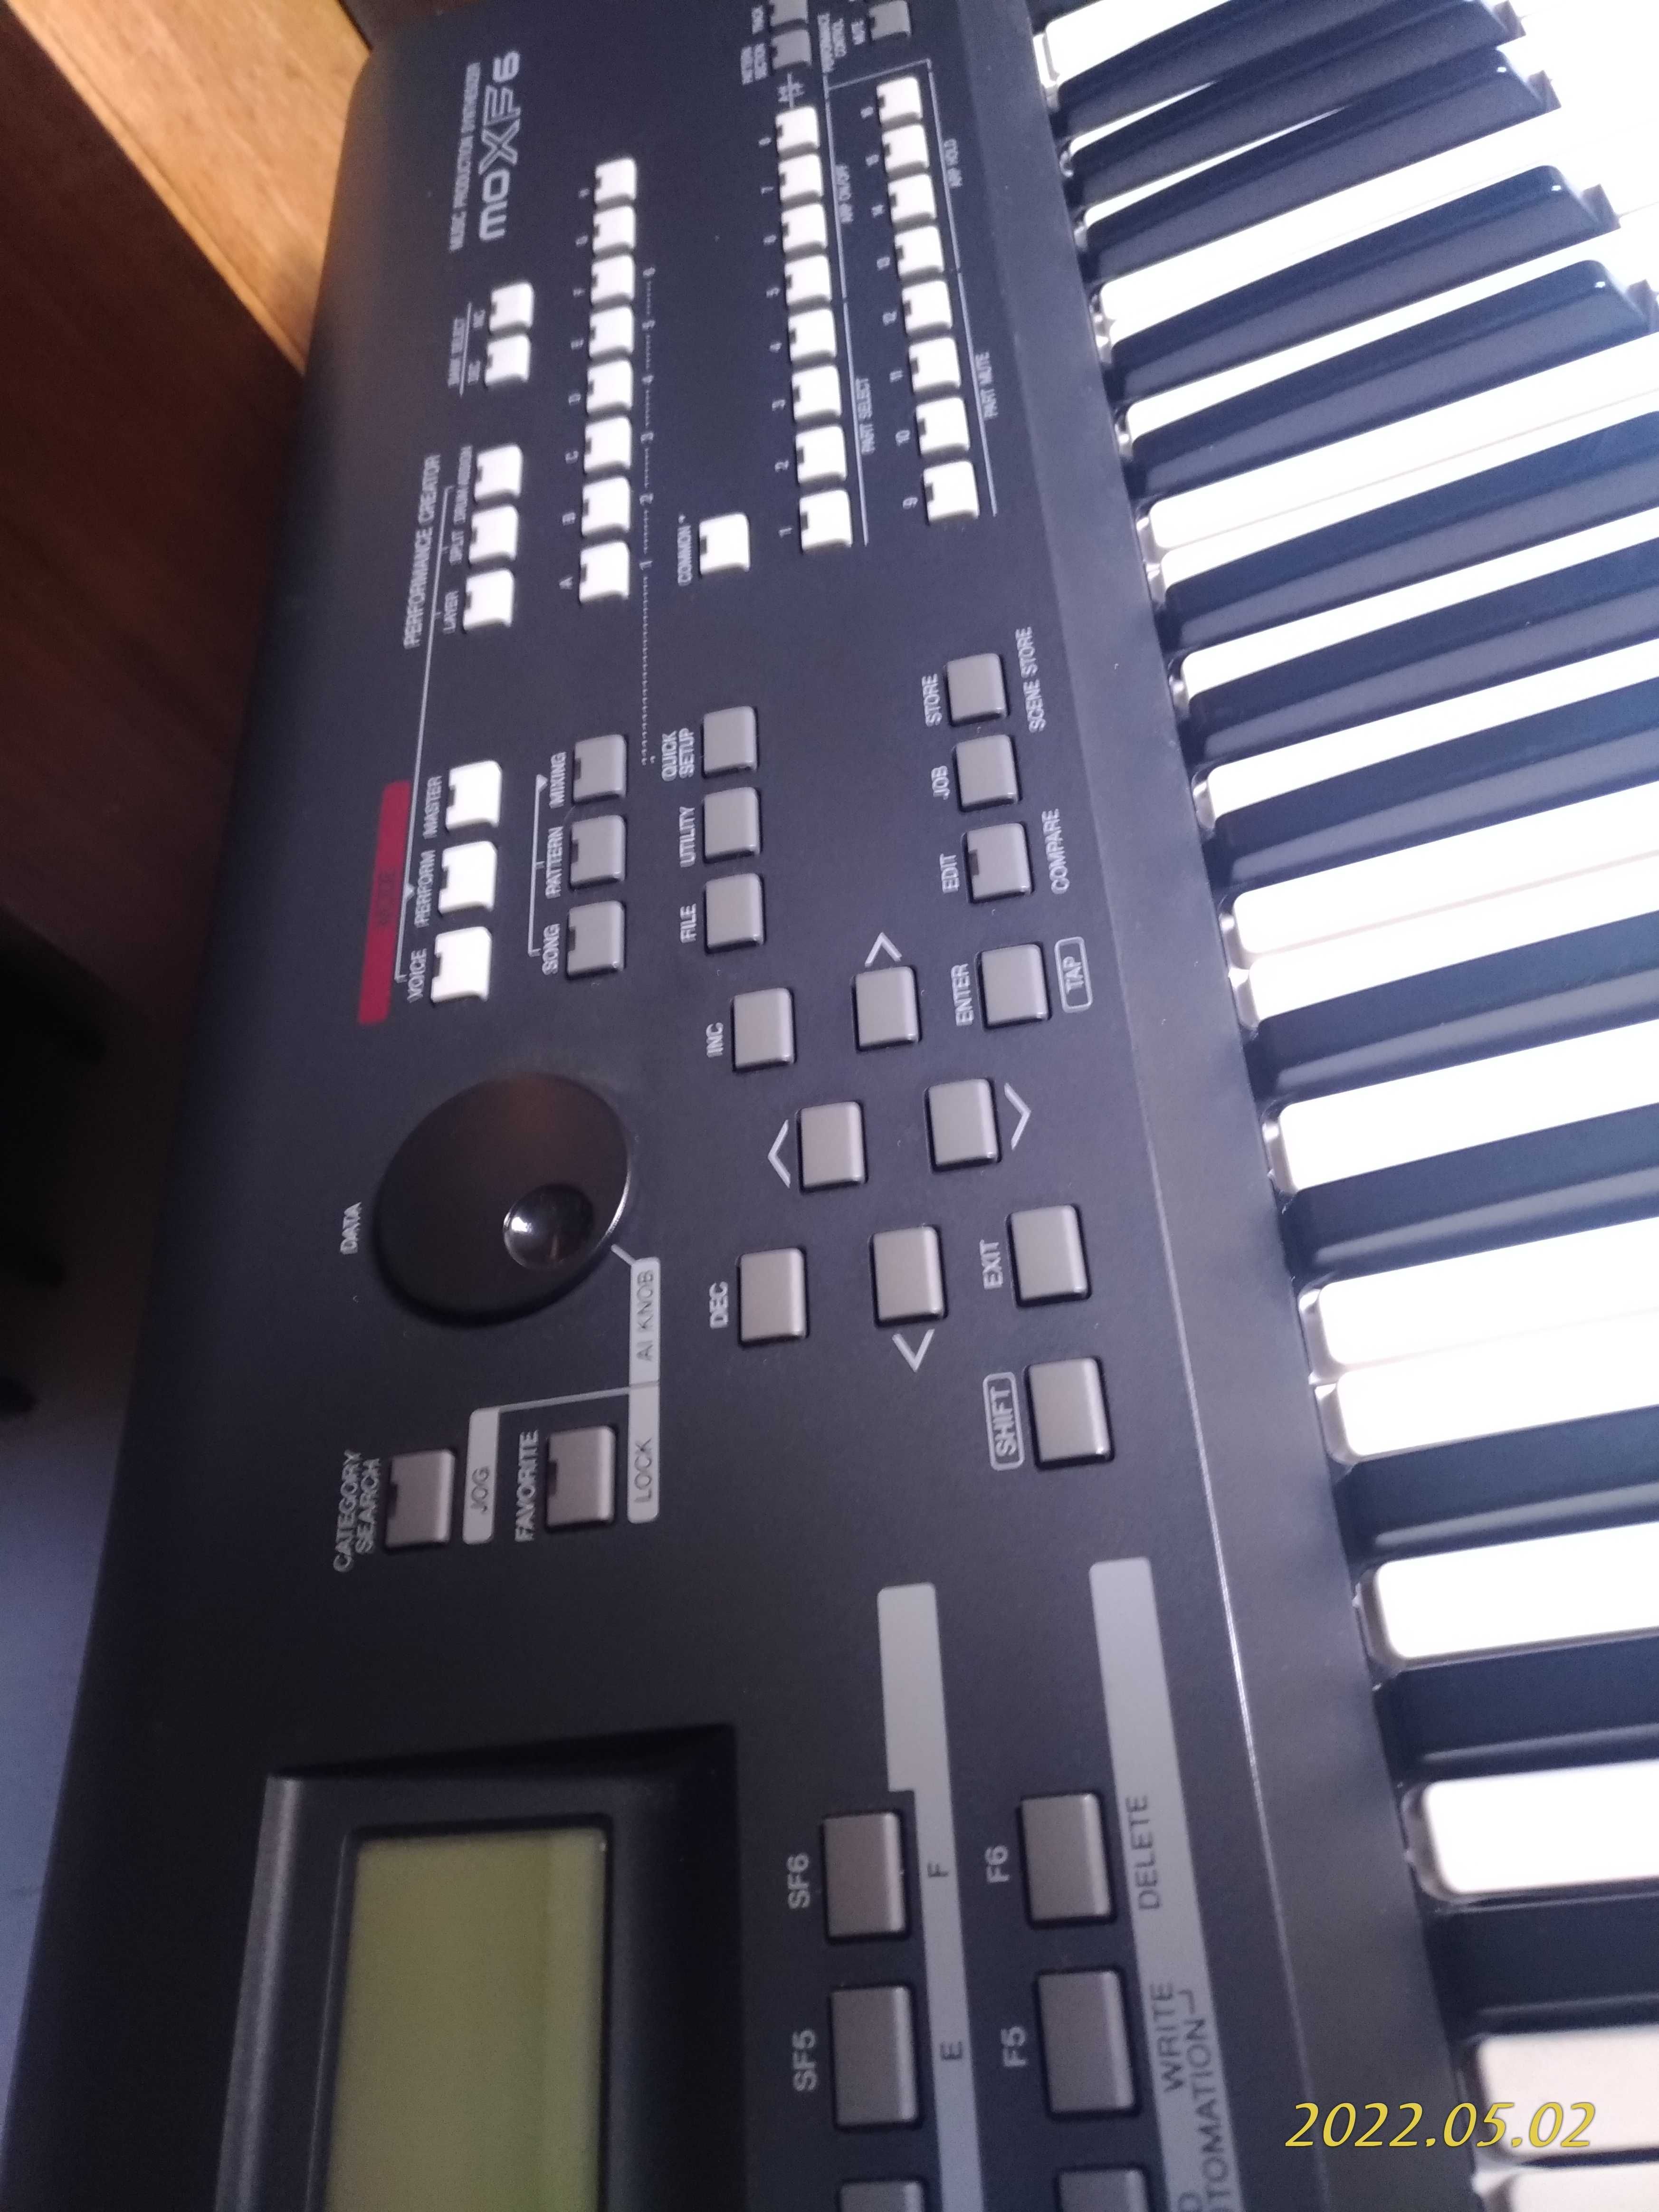 Yamaha Moxf 6 - Workstation